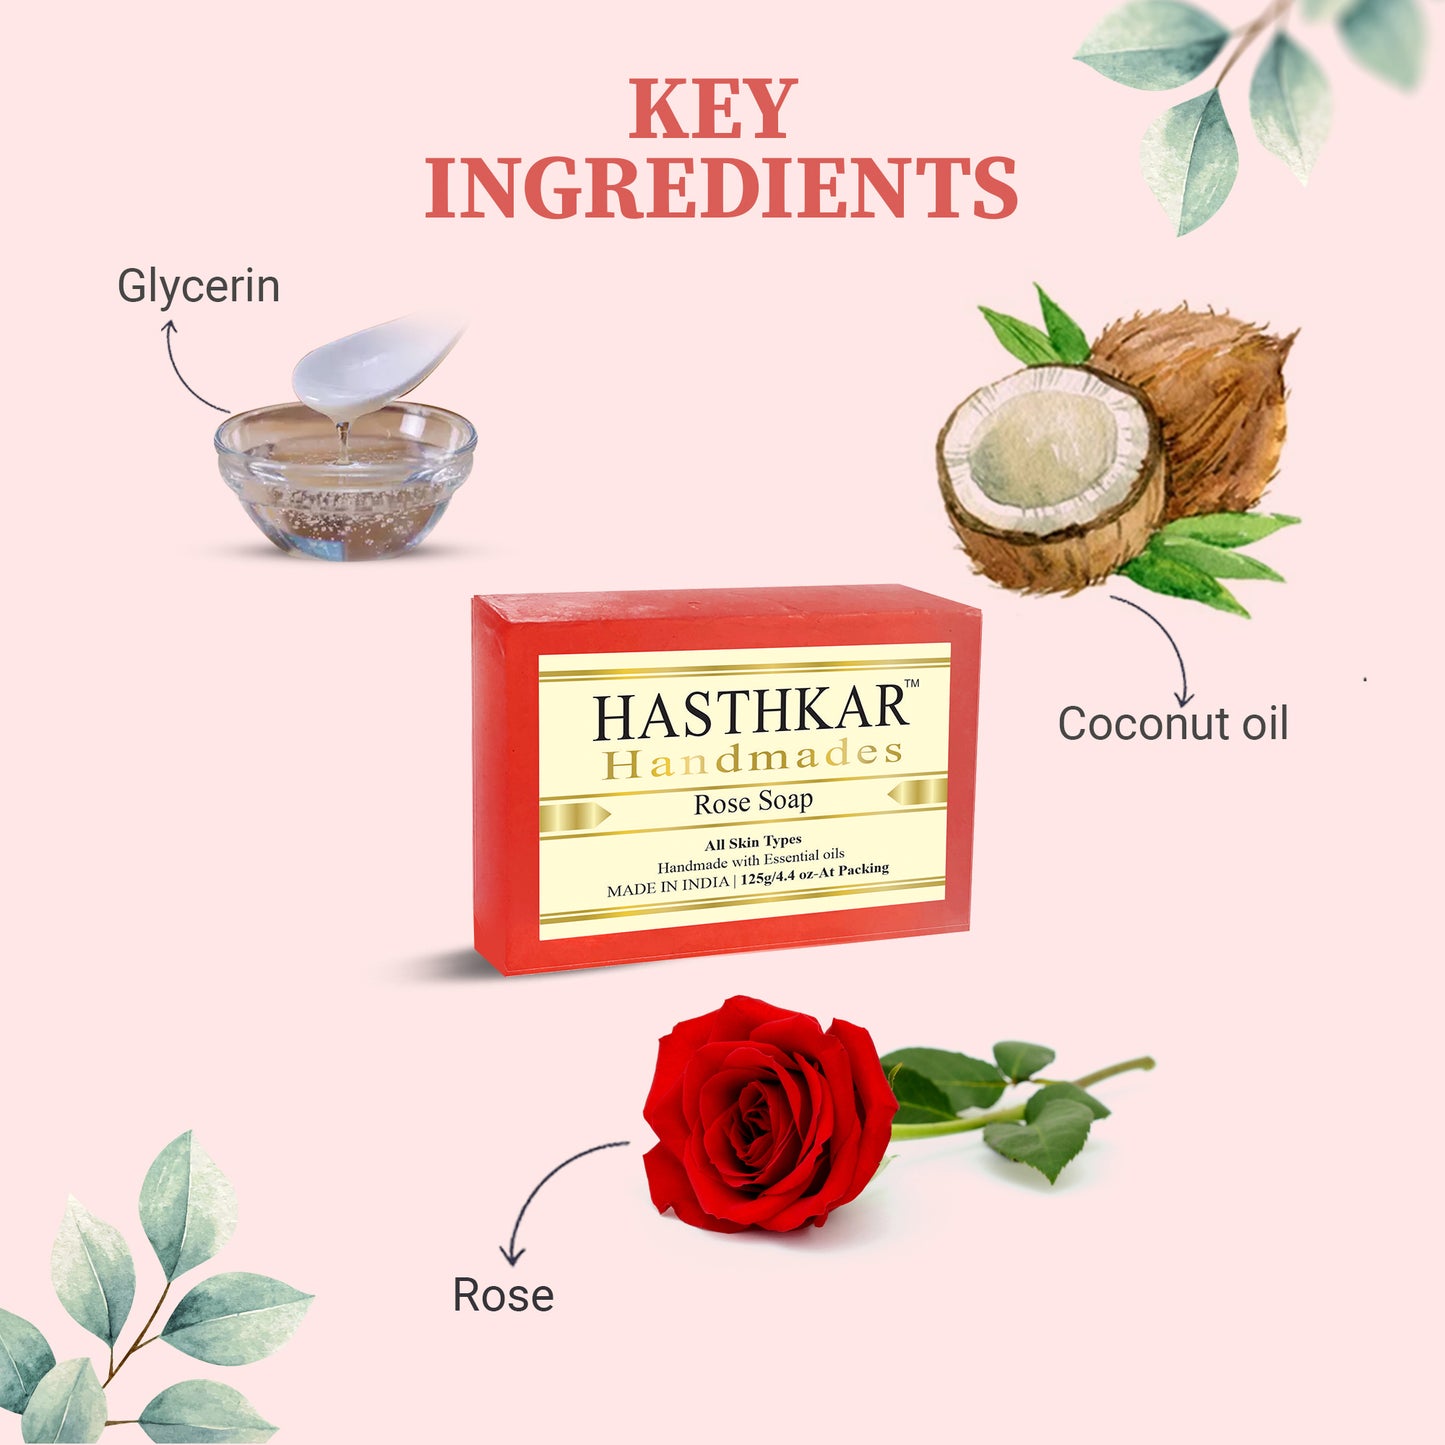 Images of Hasthkar handmades rose bath soap men and women key ingredients 